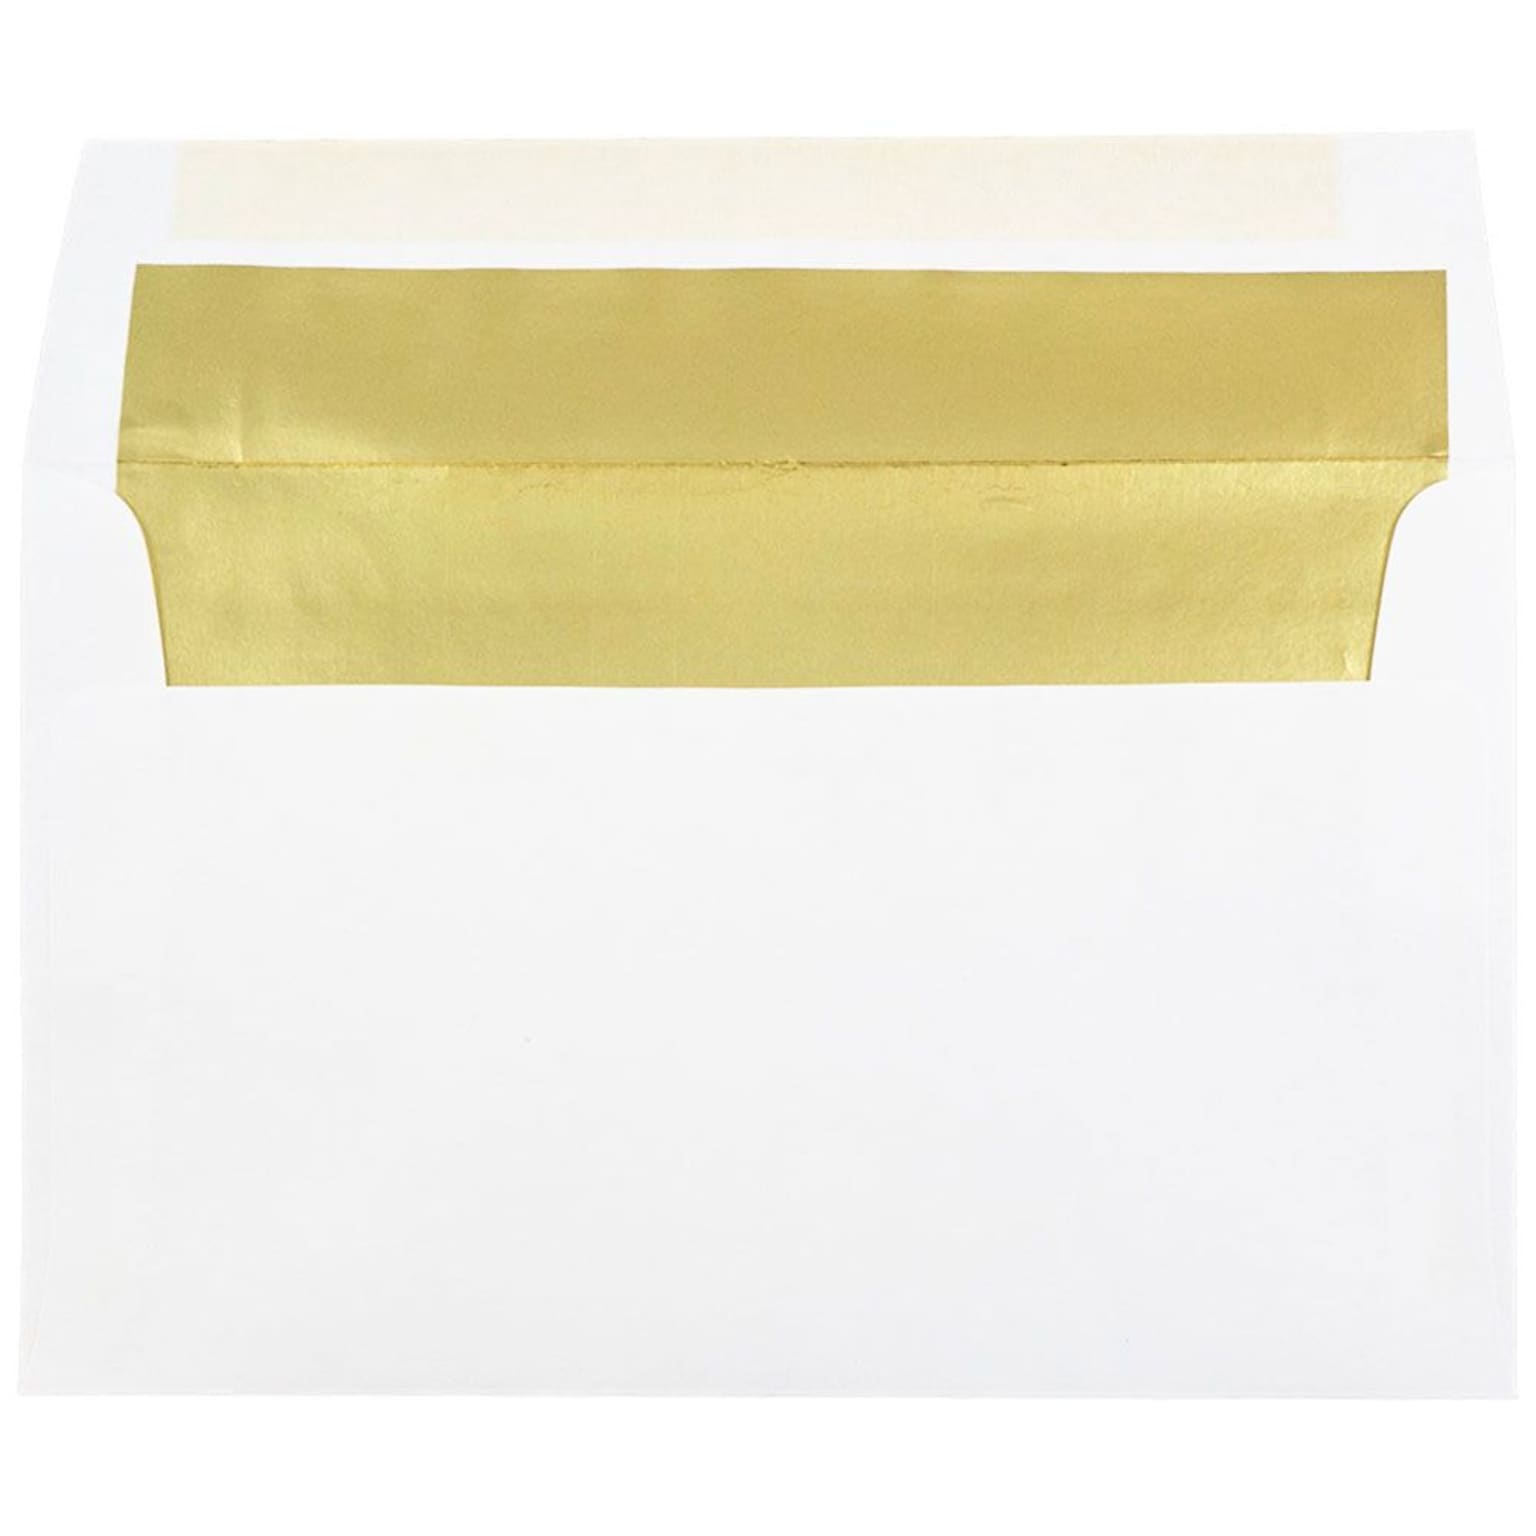 JAM Paper A10 Foil Lined Invitation Envelopes, 6 x 9.5, White with Gold Foil, 50/Pack (900905660I)